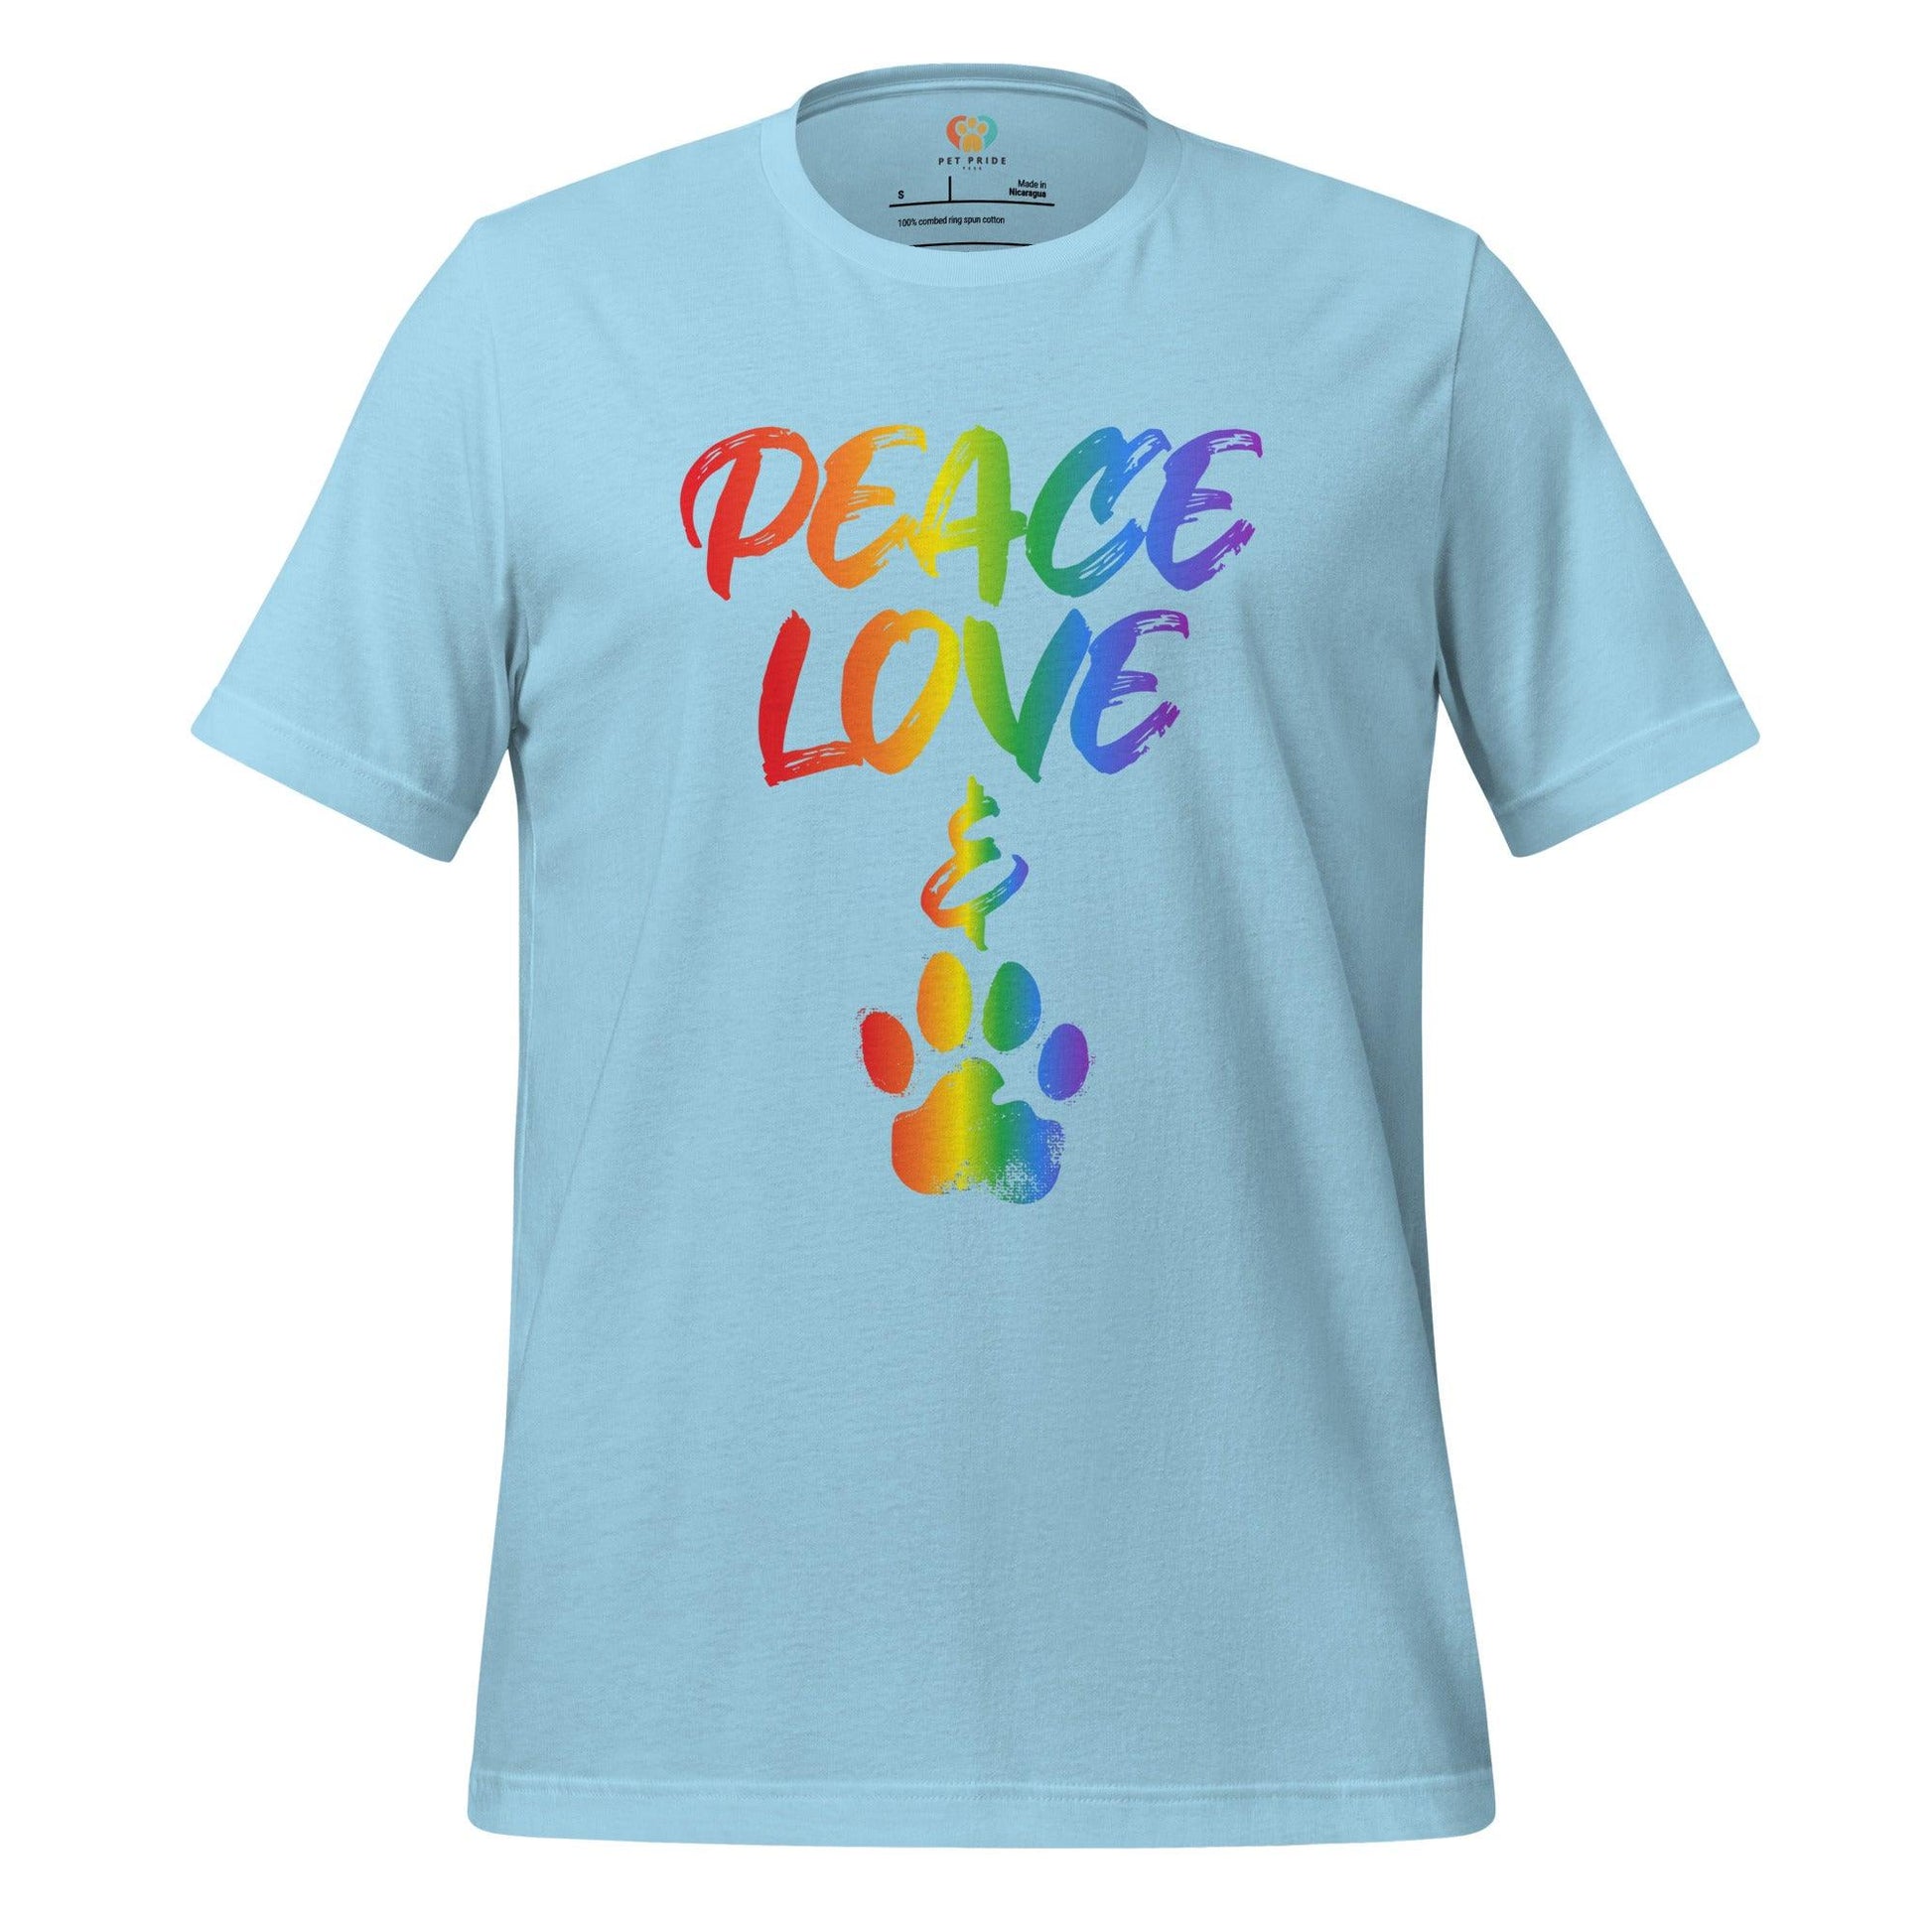 Peace, Love, & Paws Crew Neck Tee - Pet Pride Tees